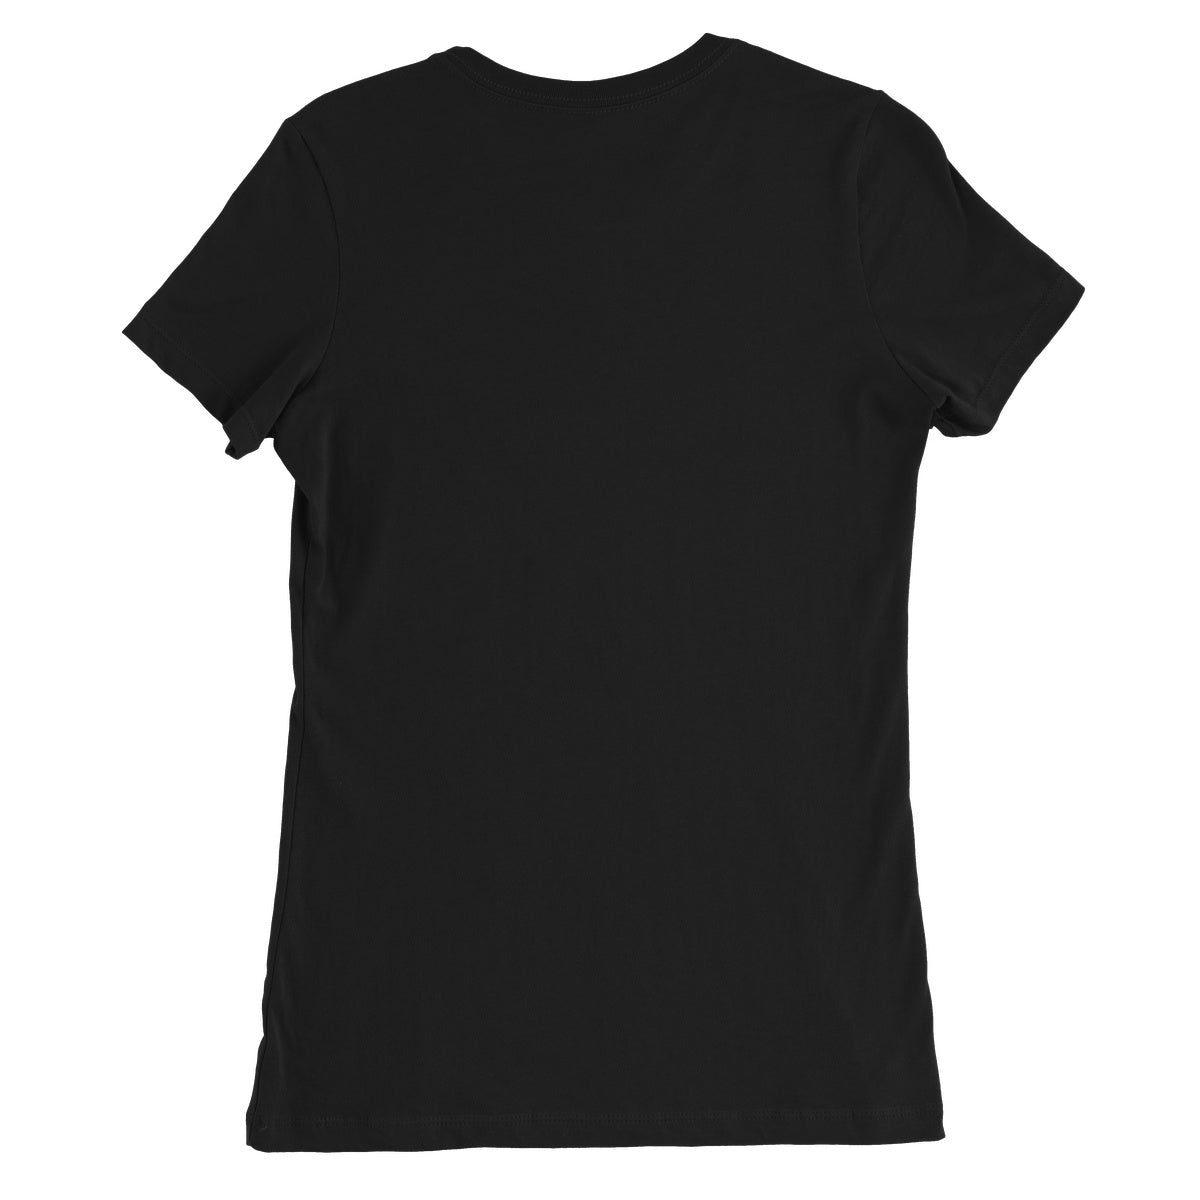 Dipole, Aurora Sphere Women's Favourite T-Shirt